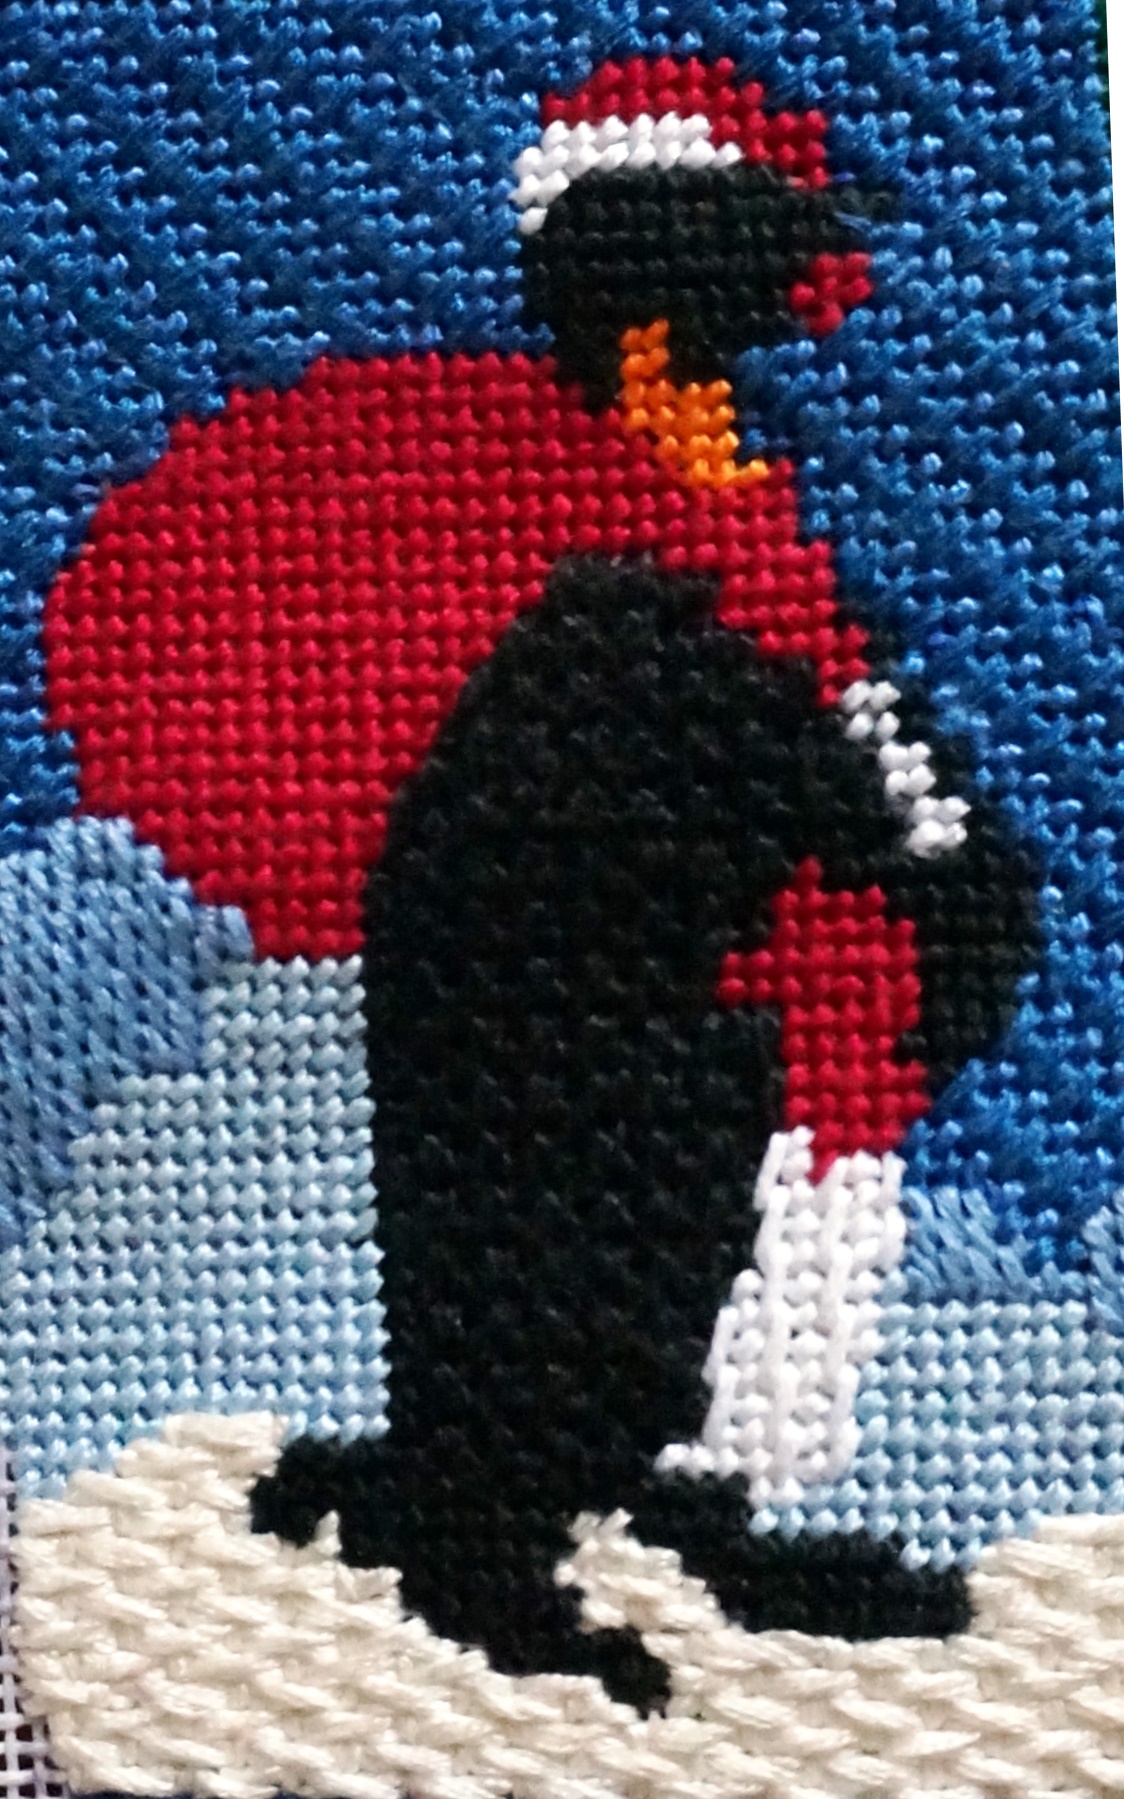 needlepoint stitch snow stitches canvas bargello kits thread penguin santa looks he needlepaint worked cloud walking having kit